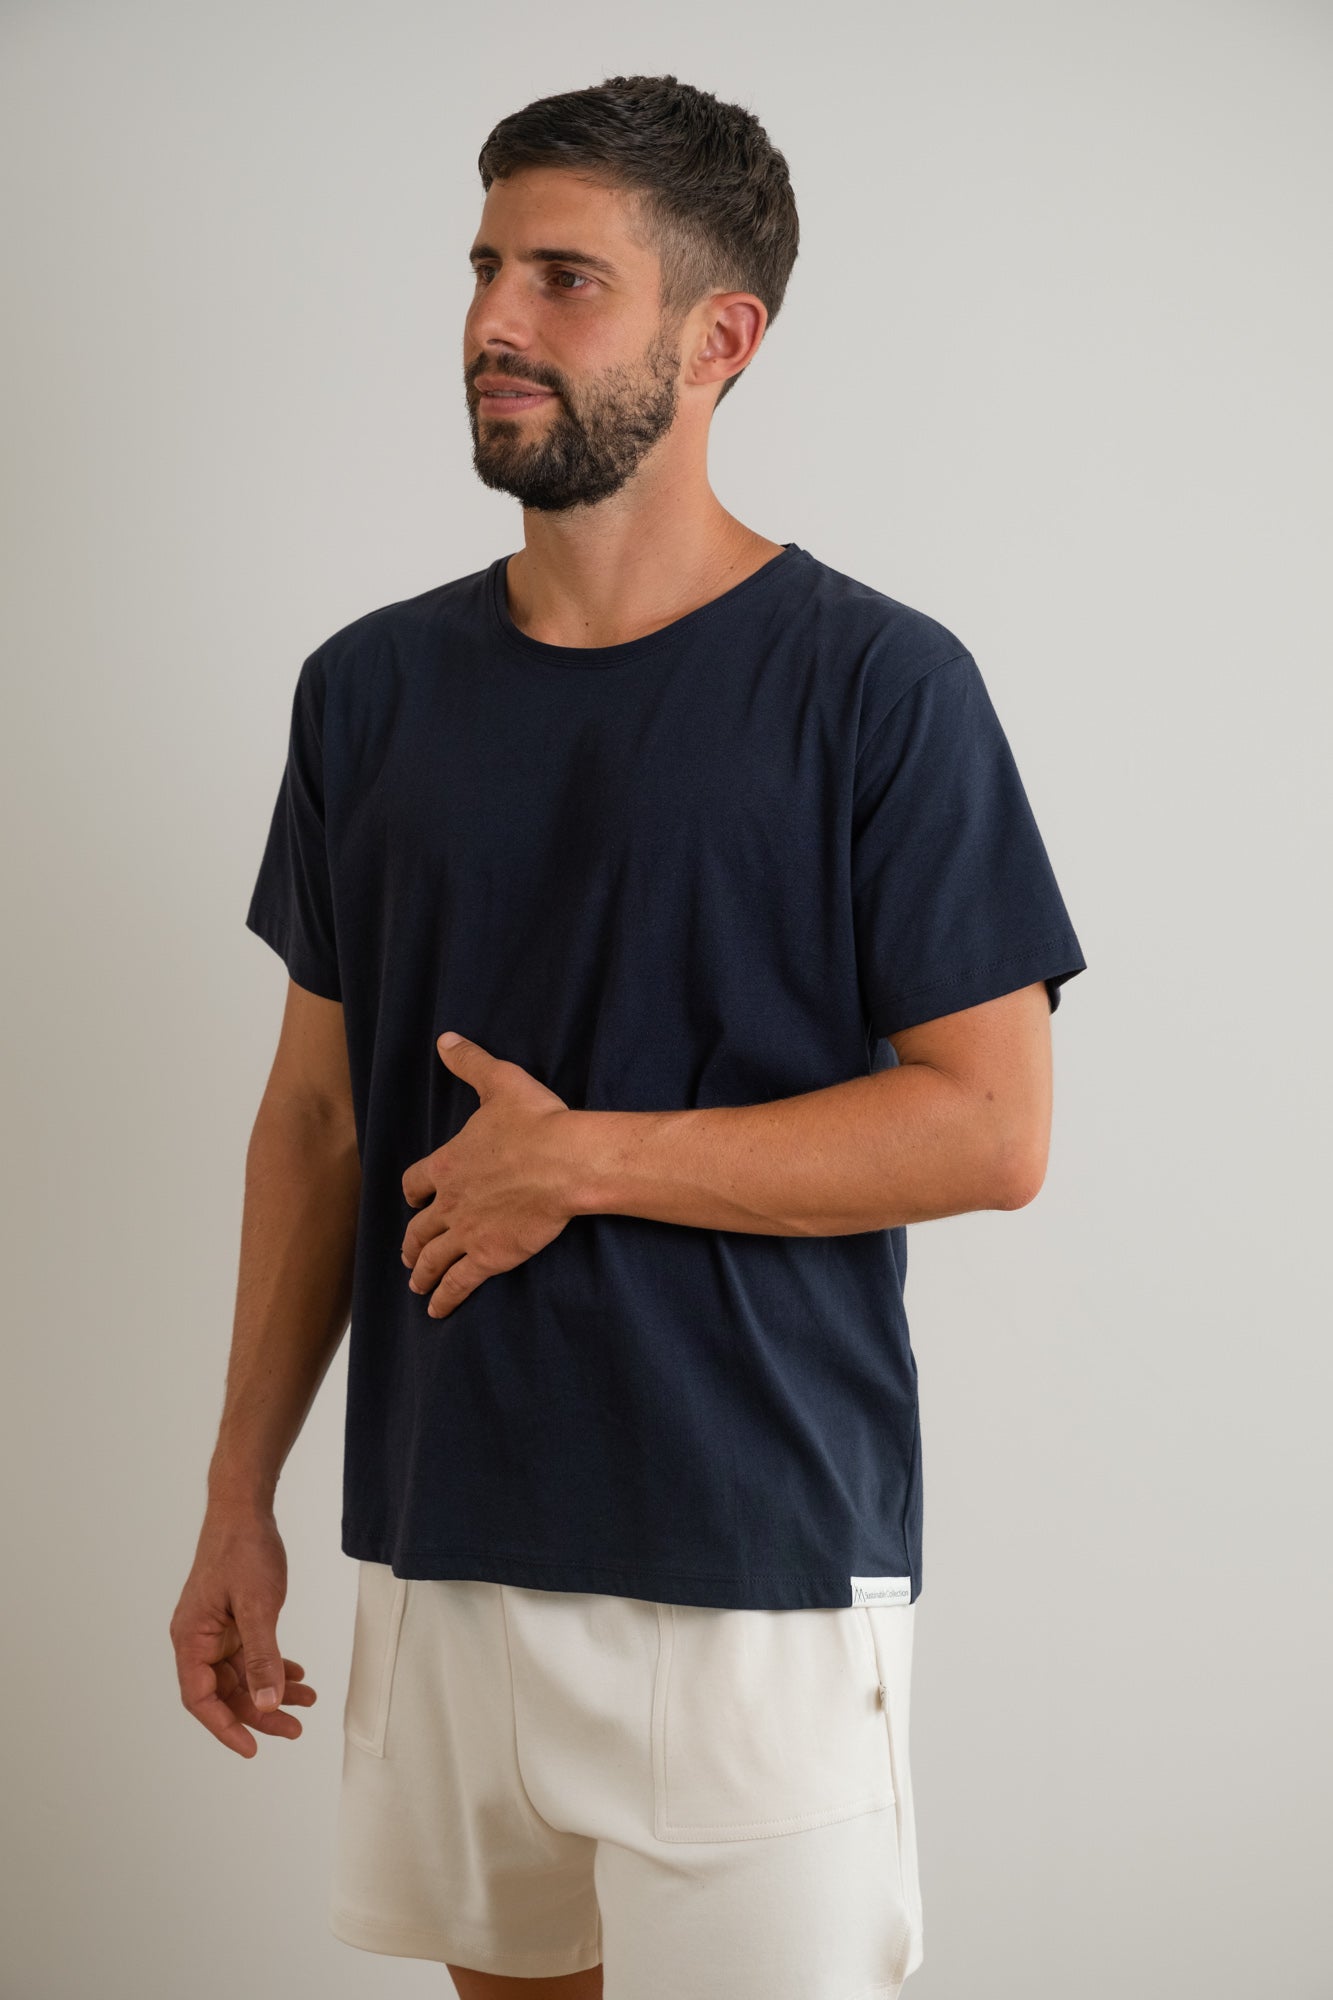 MIA Moda Regenerativa Camisetas M Camiseta Esencial hombre - azul